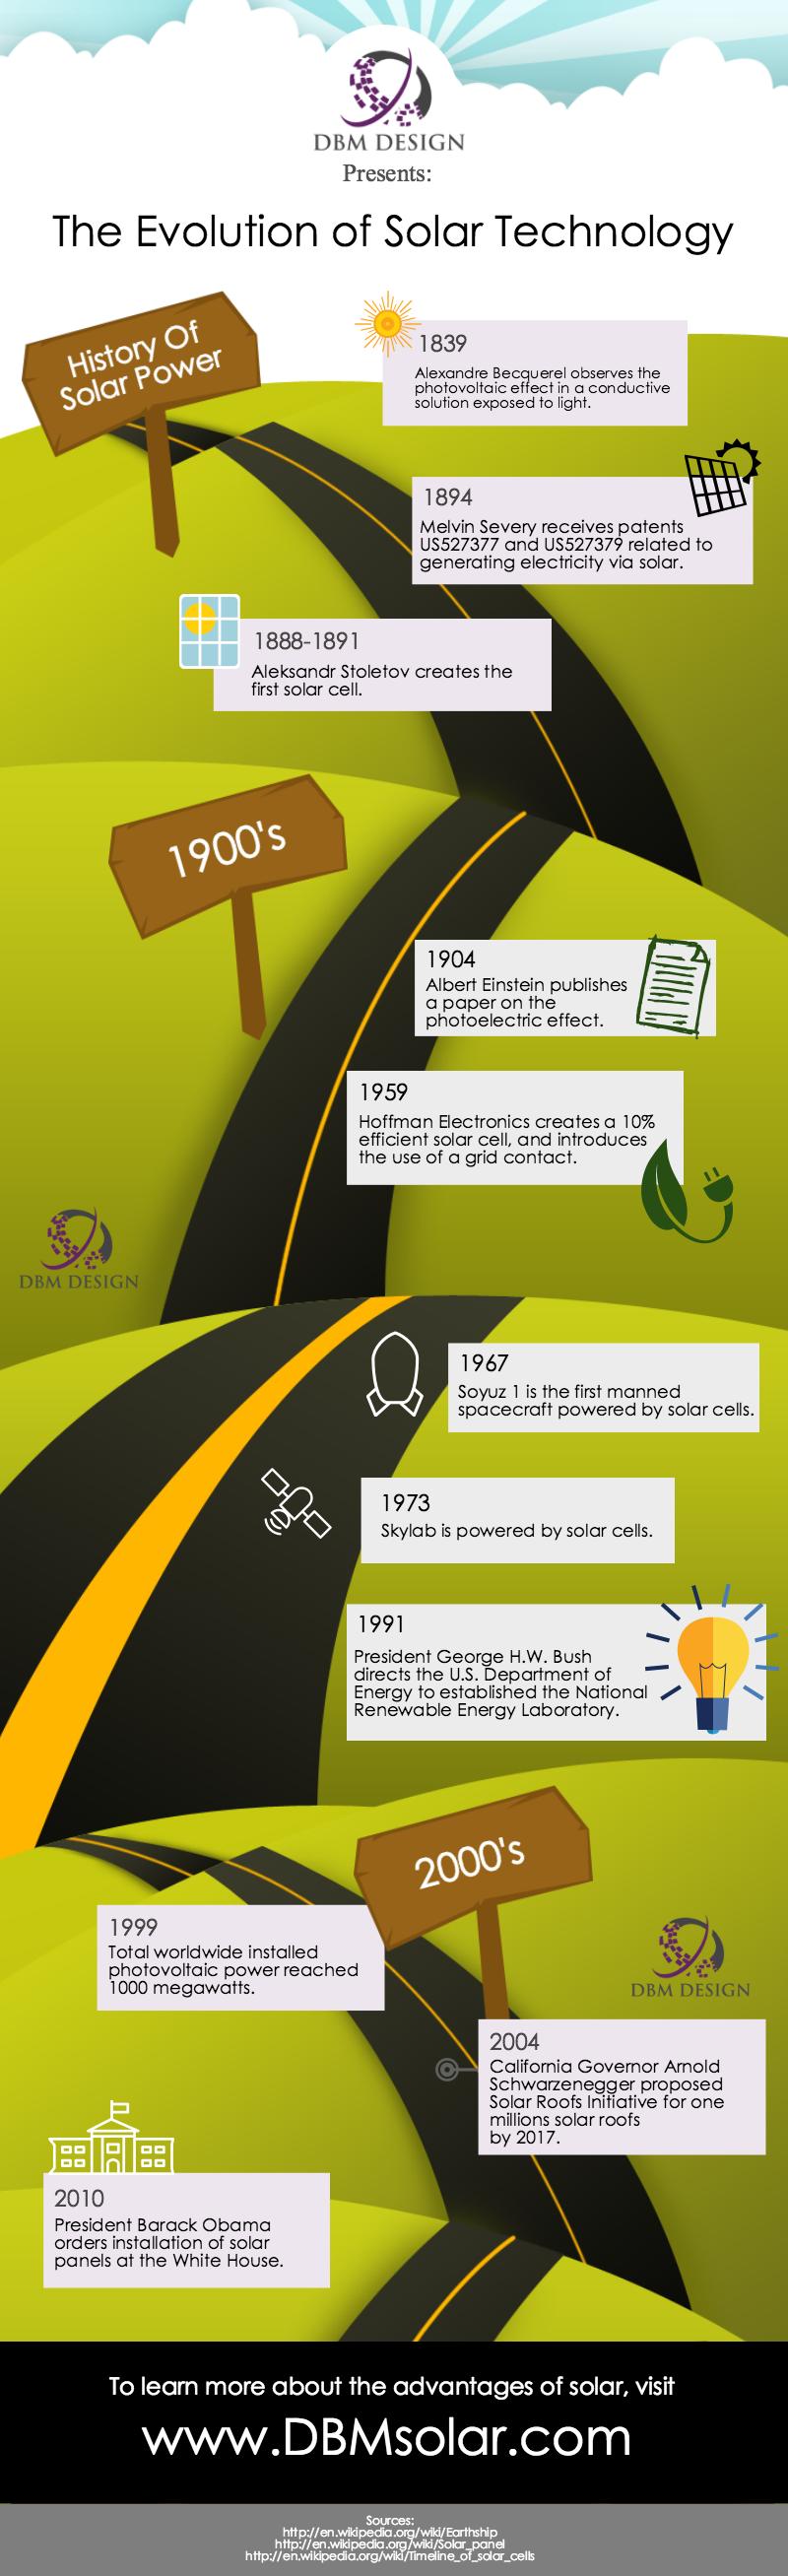 history of solar power